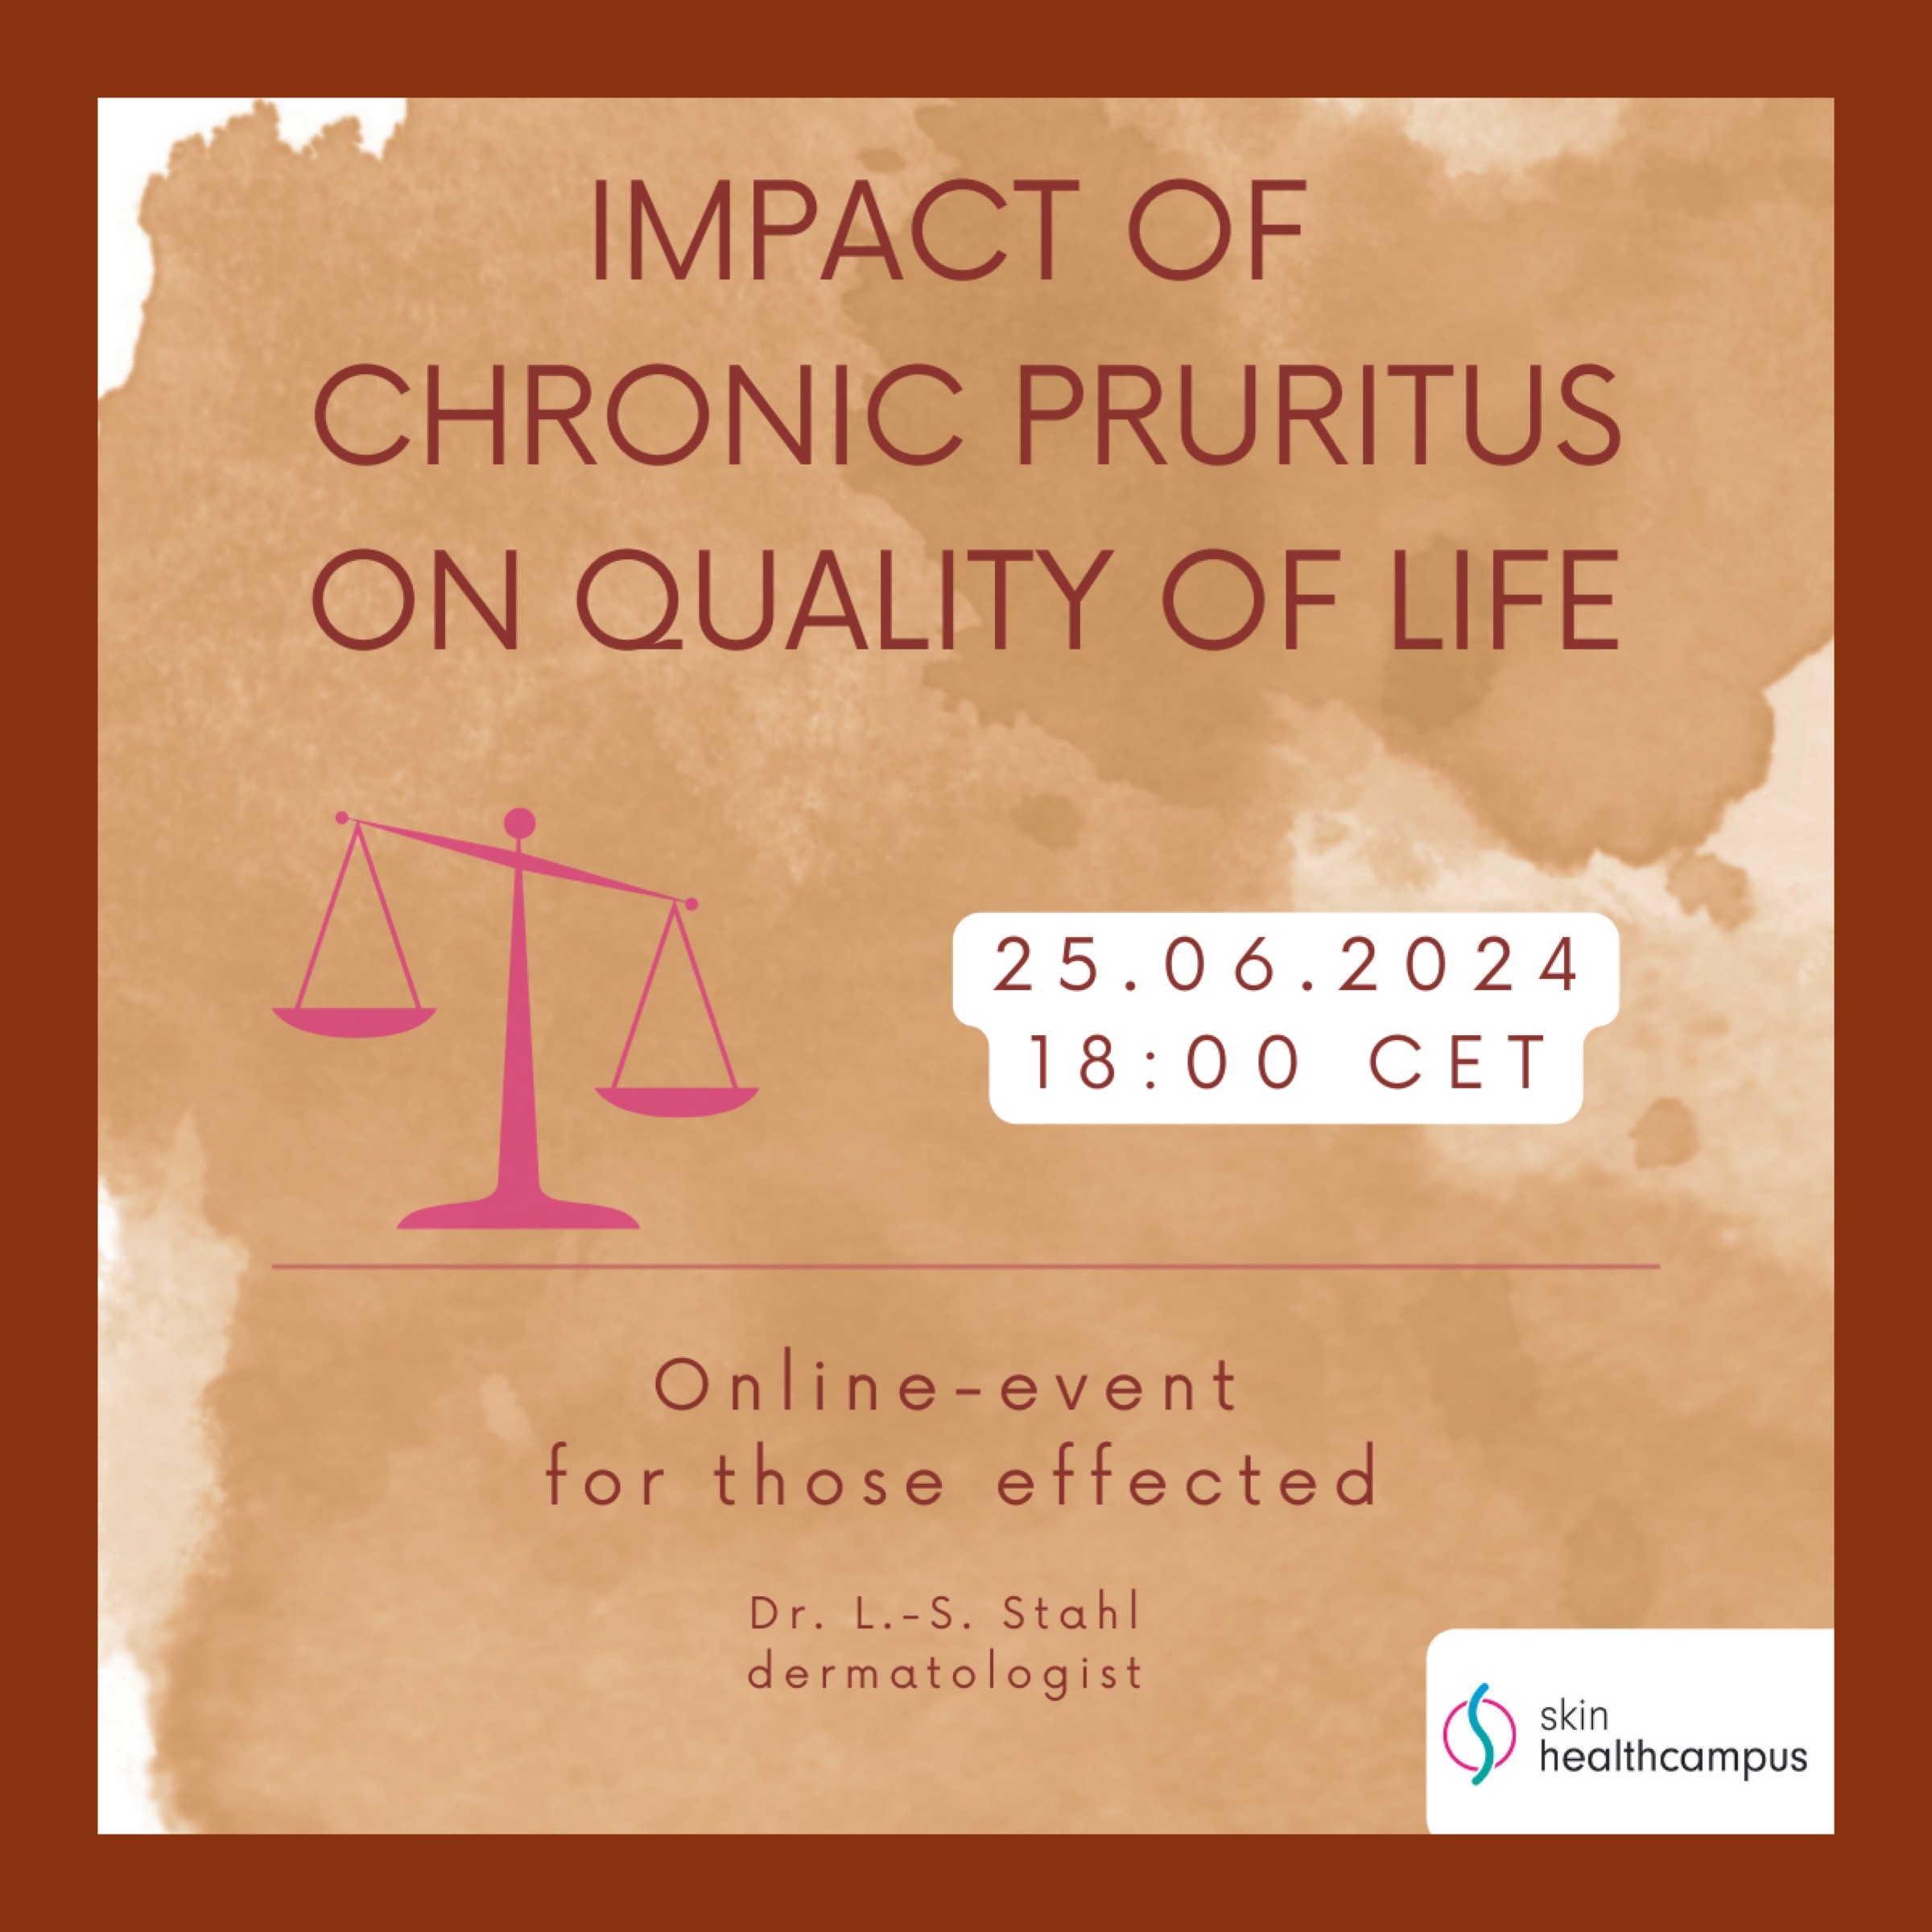 Impact of chronic pruritus on quality of life